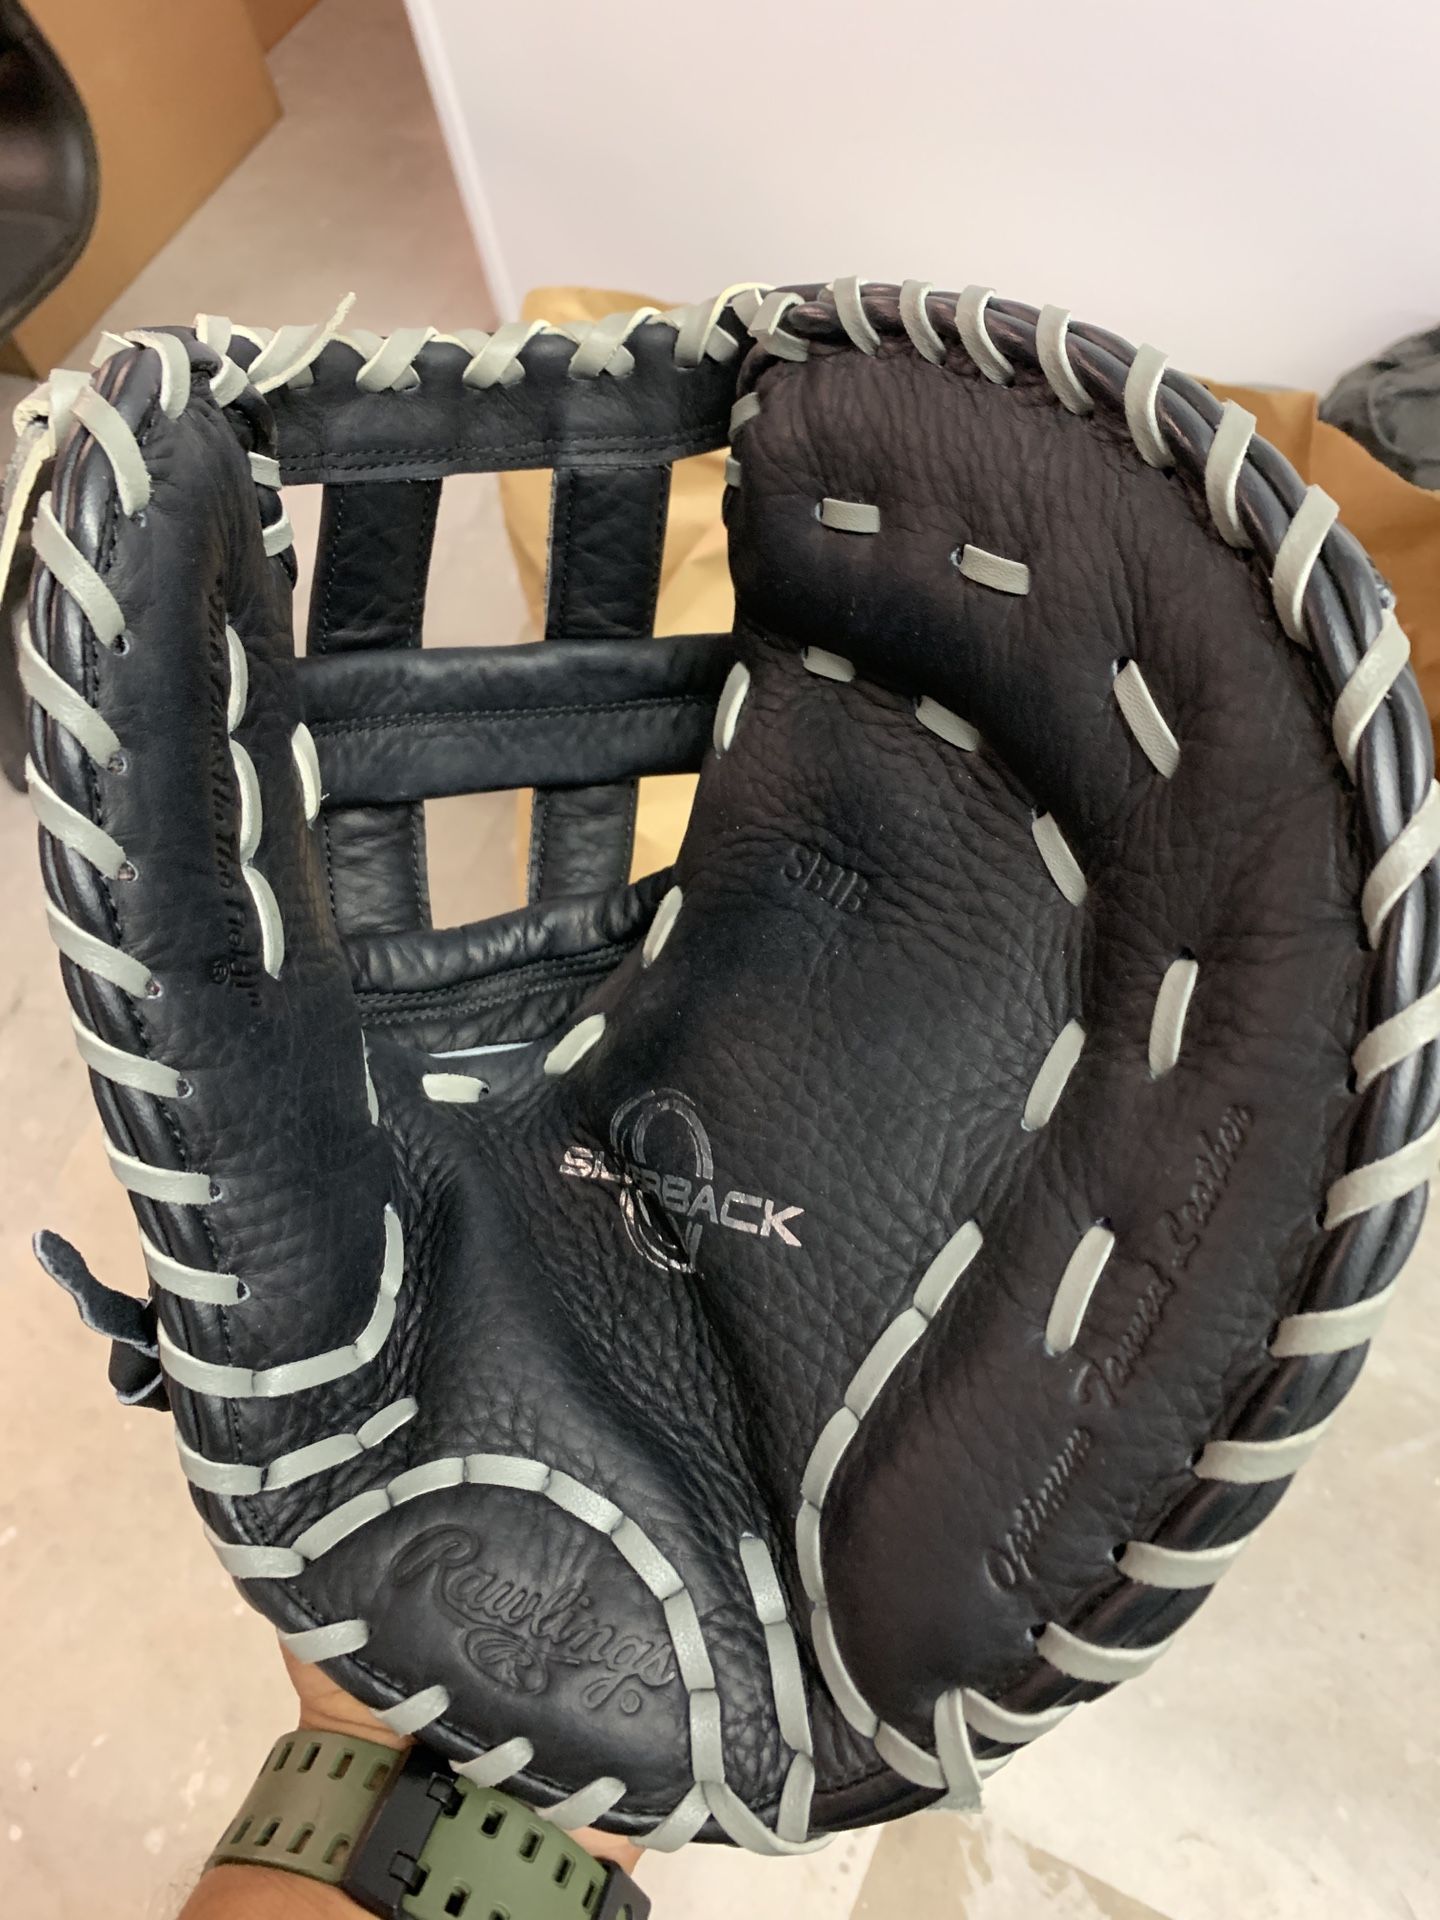 Rawlings softballl first base glove